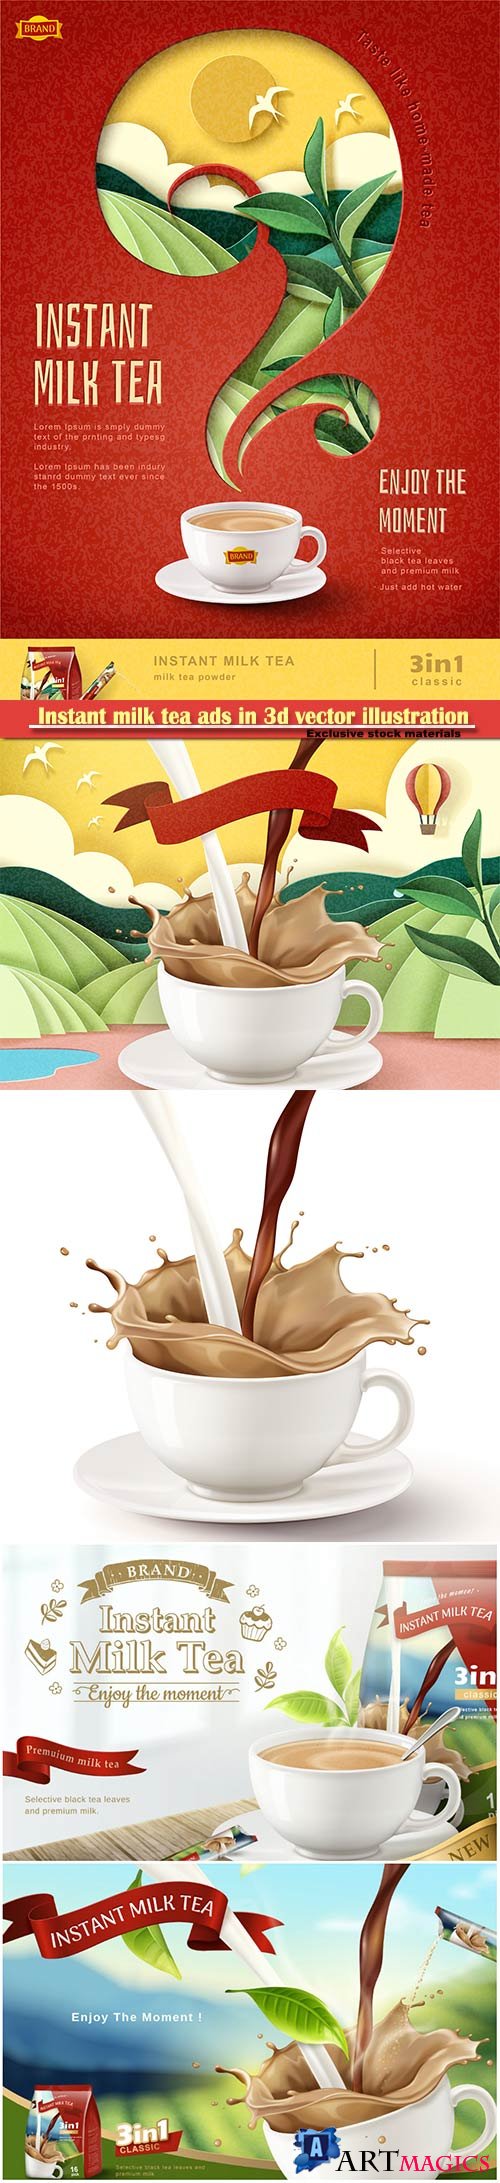 Instant milk tea ads in 3d vector illustration